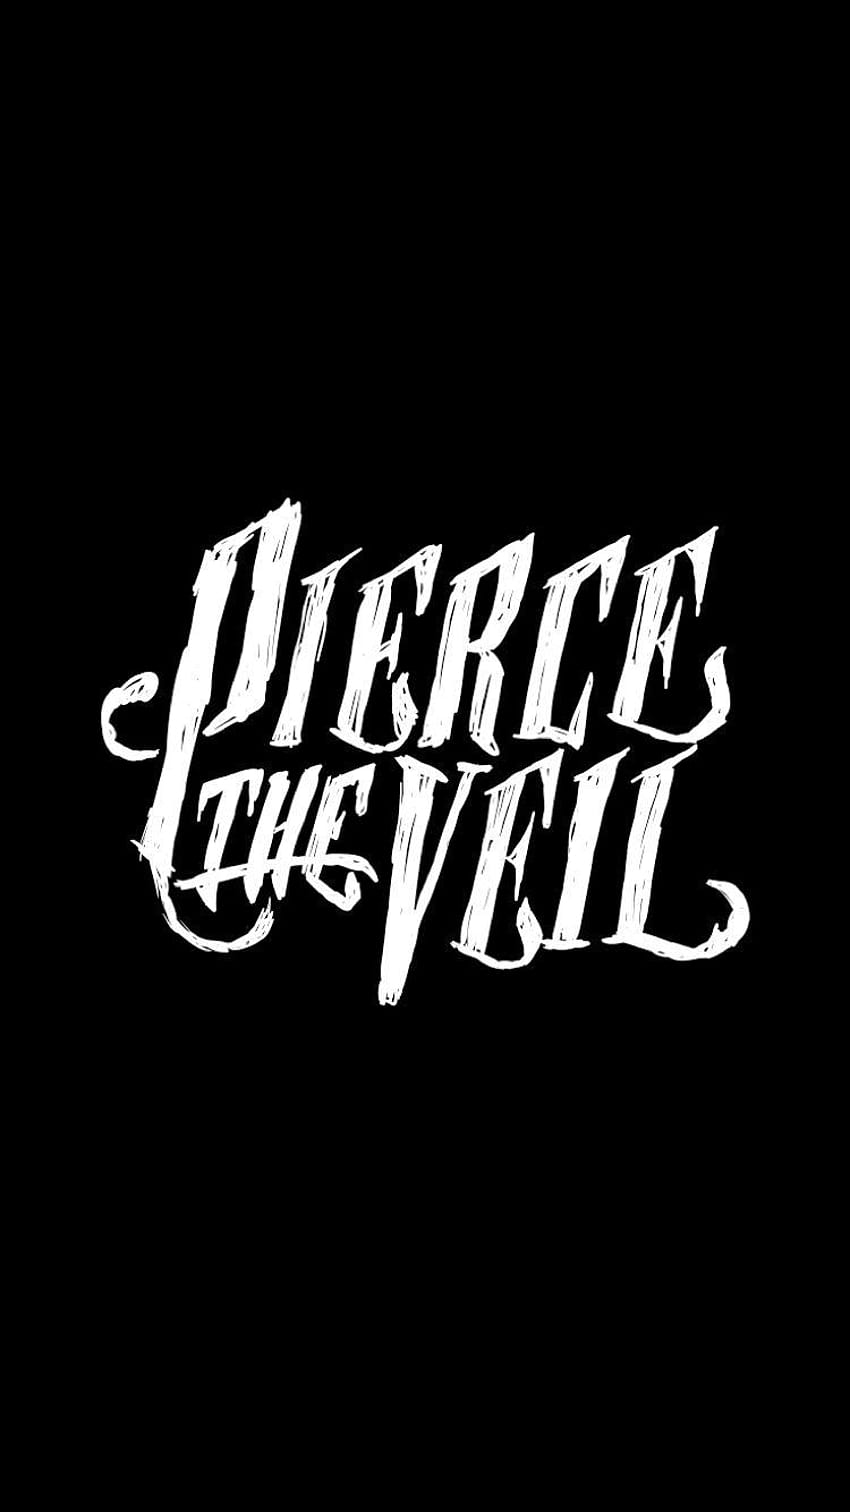 Pierce the veil in 2019, band logo HD phone wallpaper